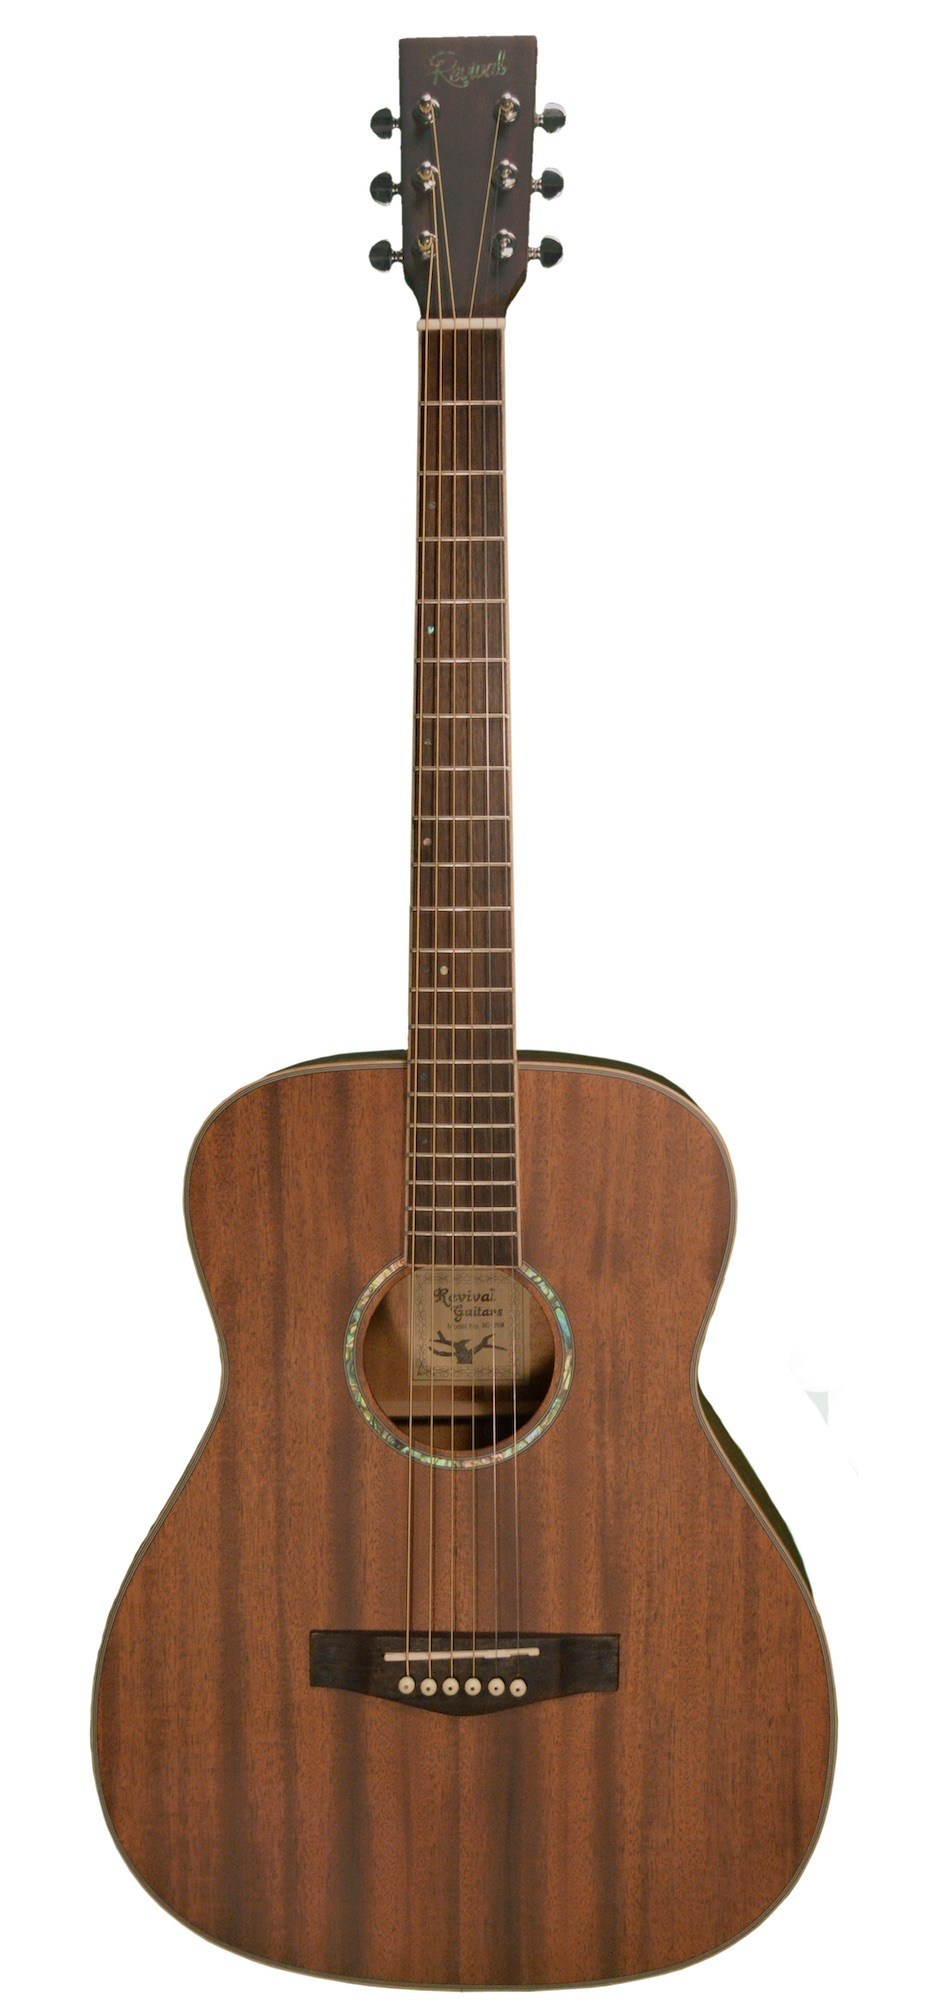 Revival RG-26M Honduran Mahogany "00" Thin Body Acoustic Guitar